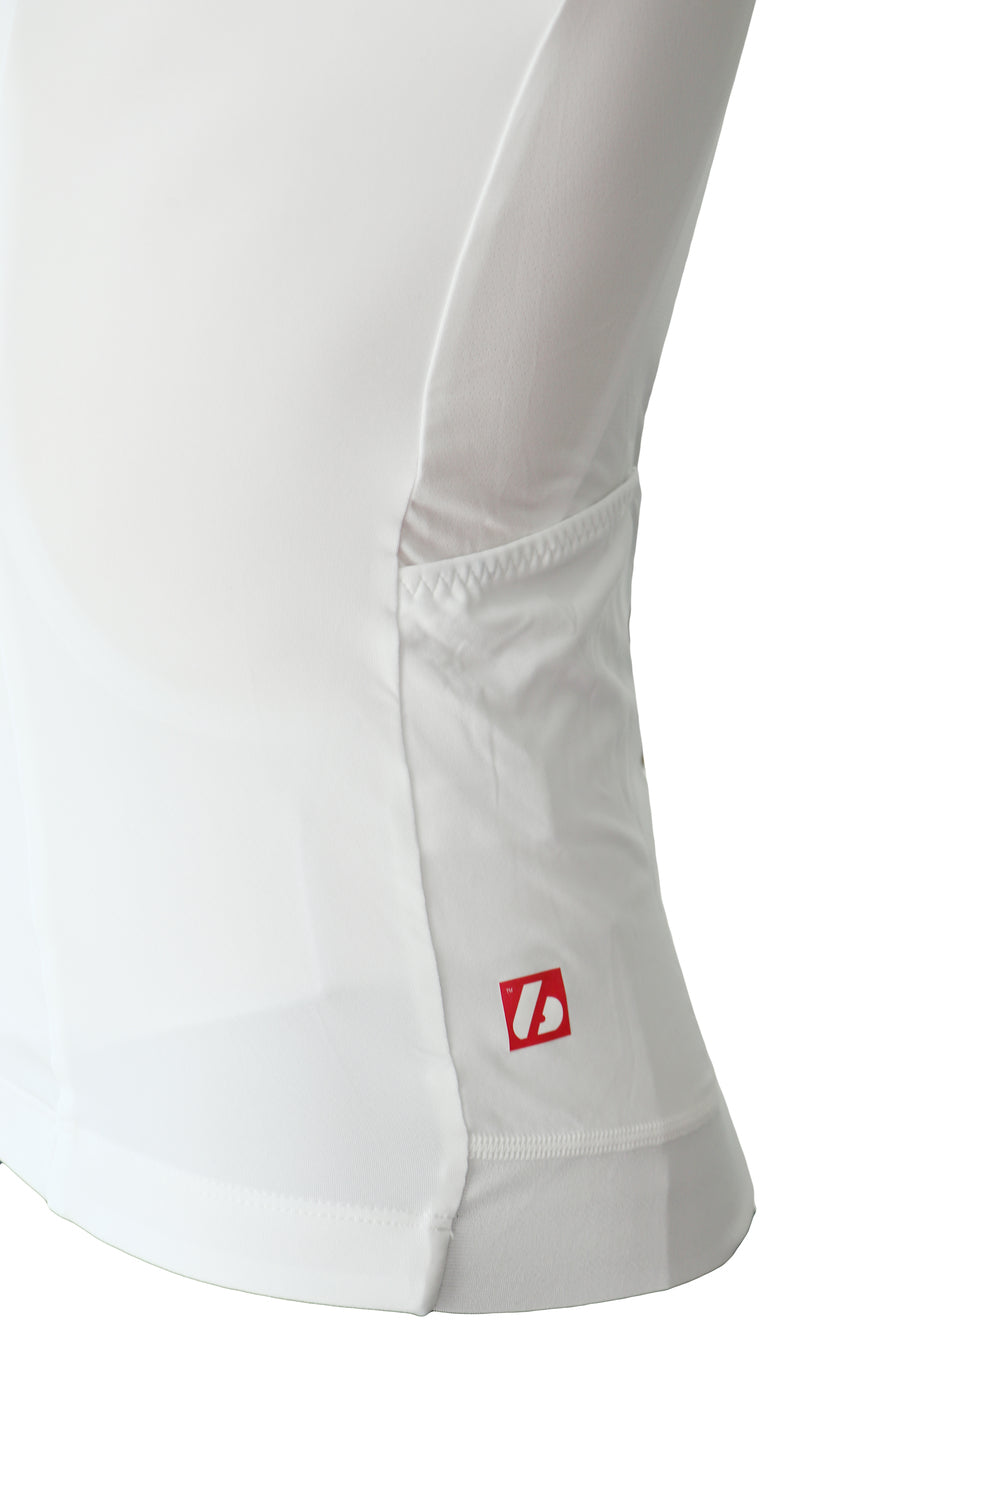 Bike textile - Short sleeved jersey, white